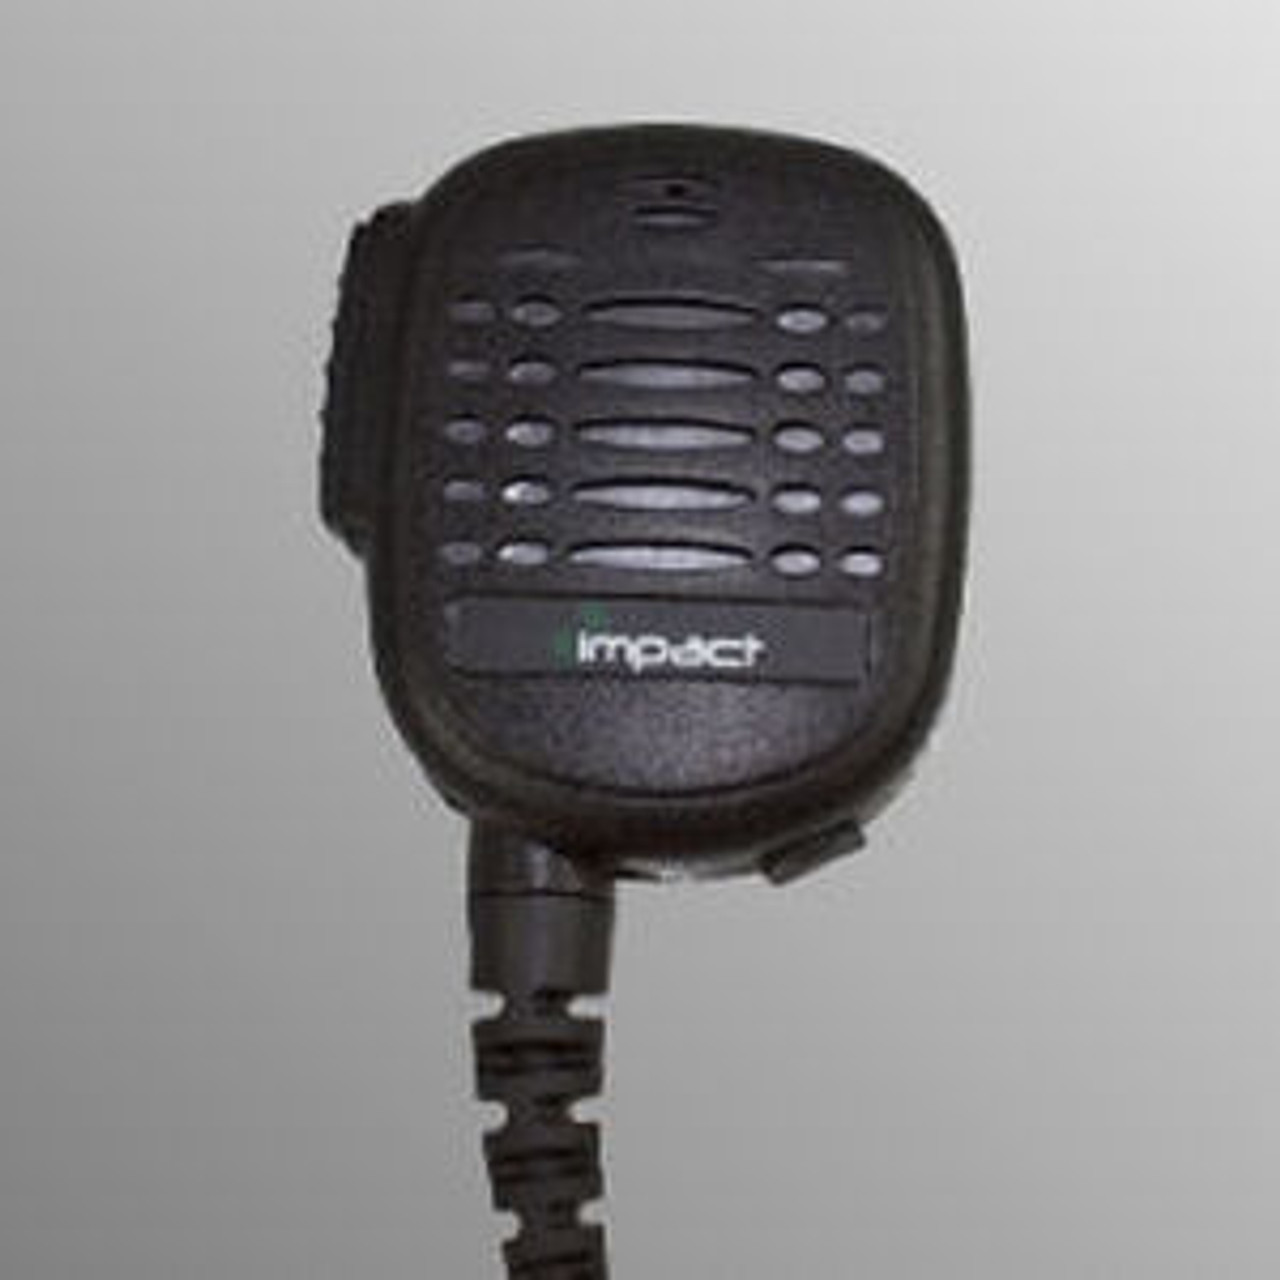 Kenwood TK-3200 Noise Canceling Speaker Mic.